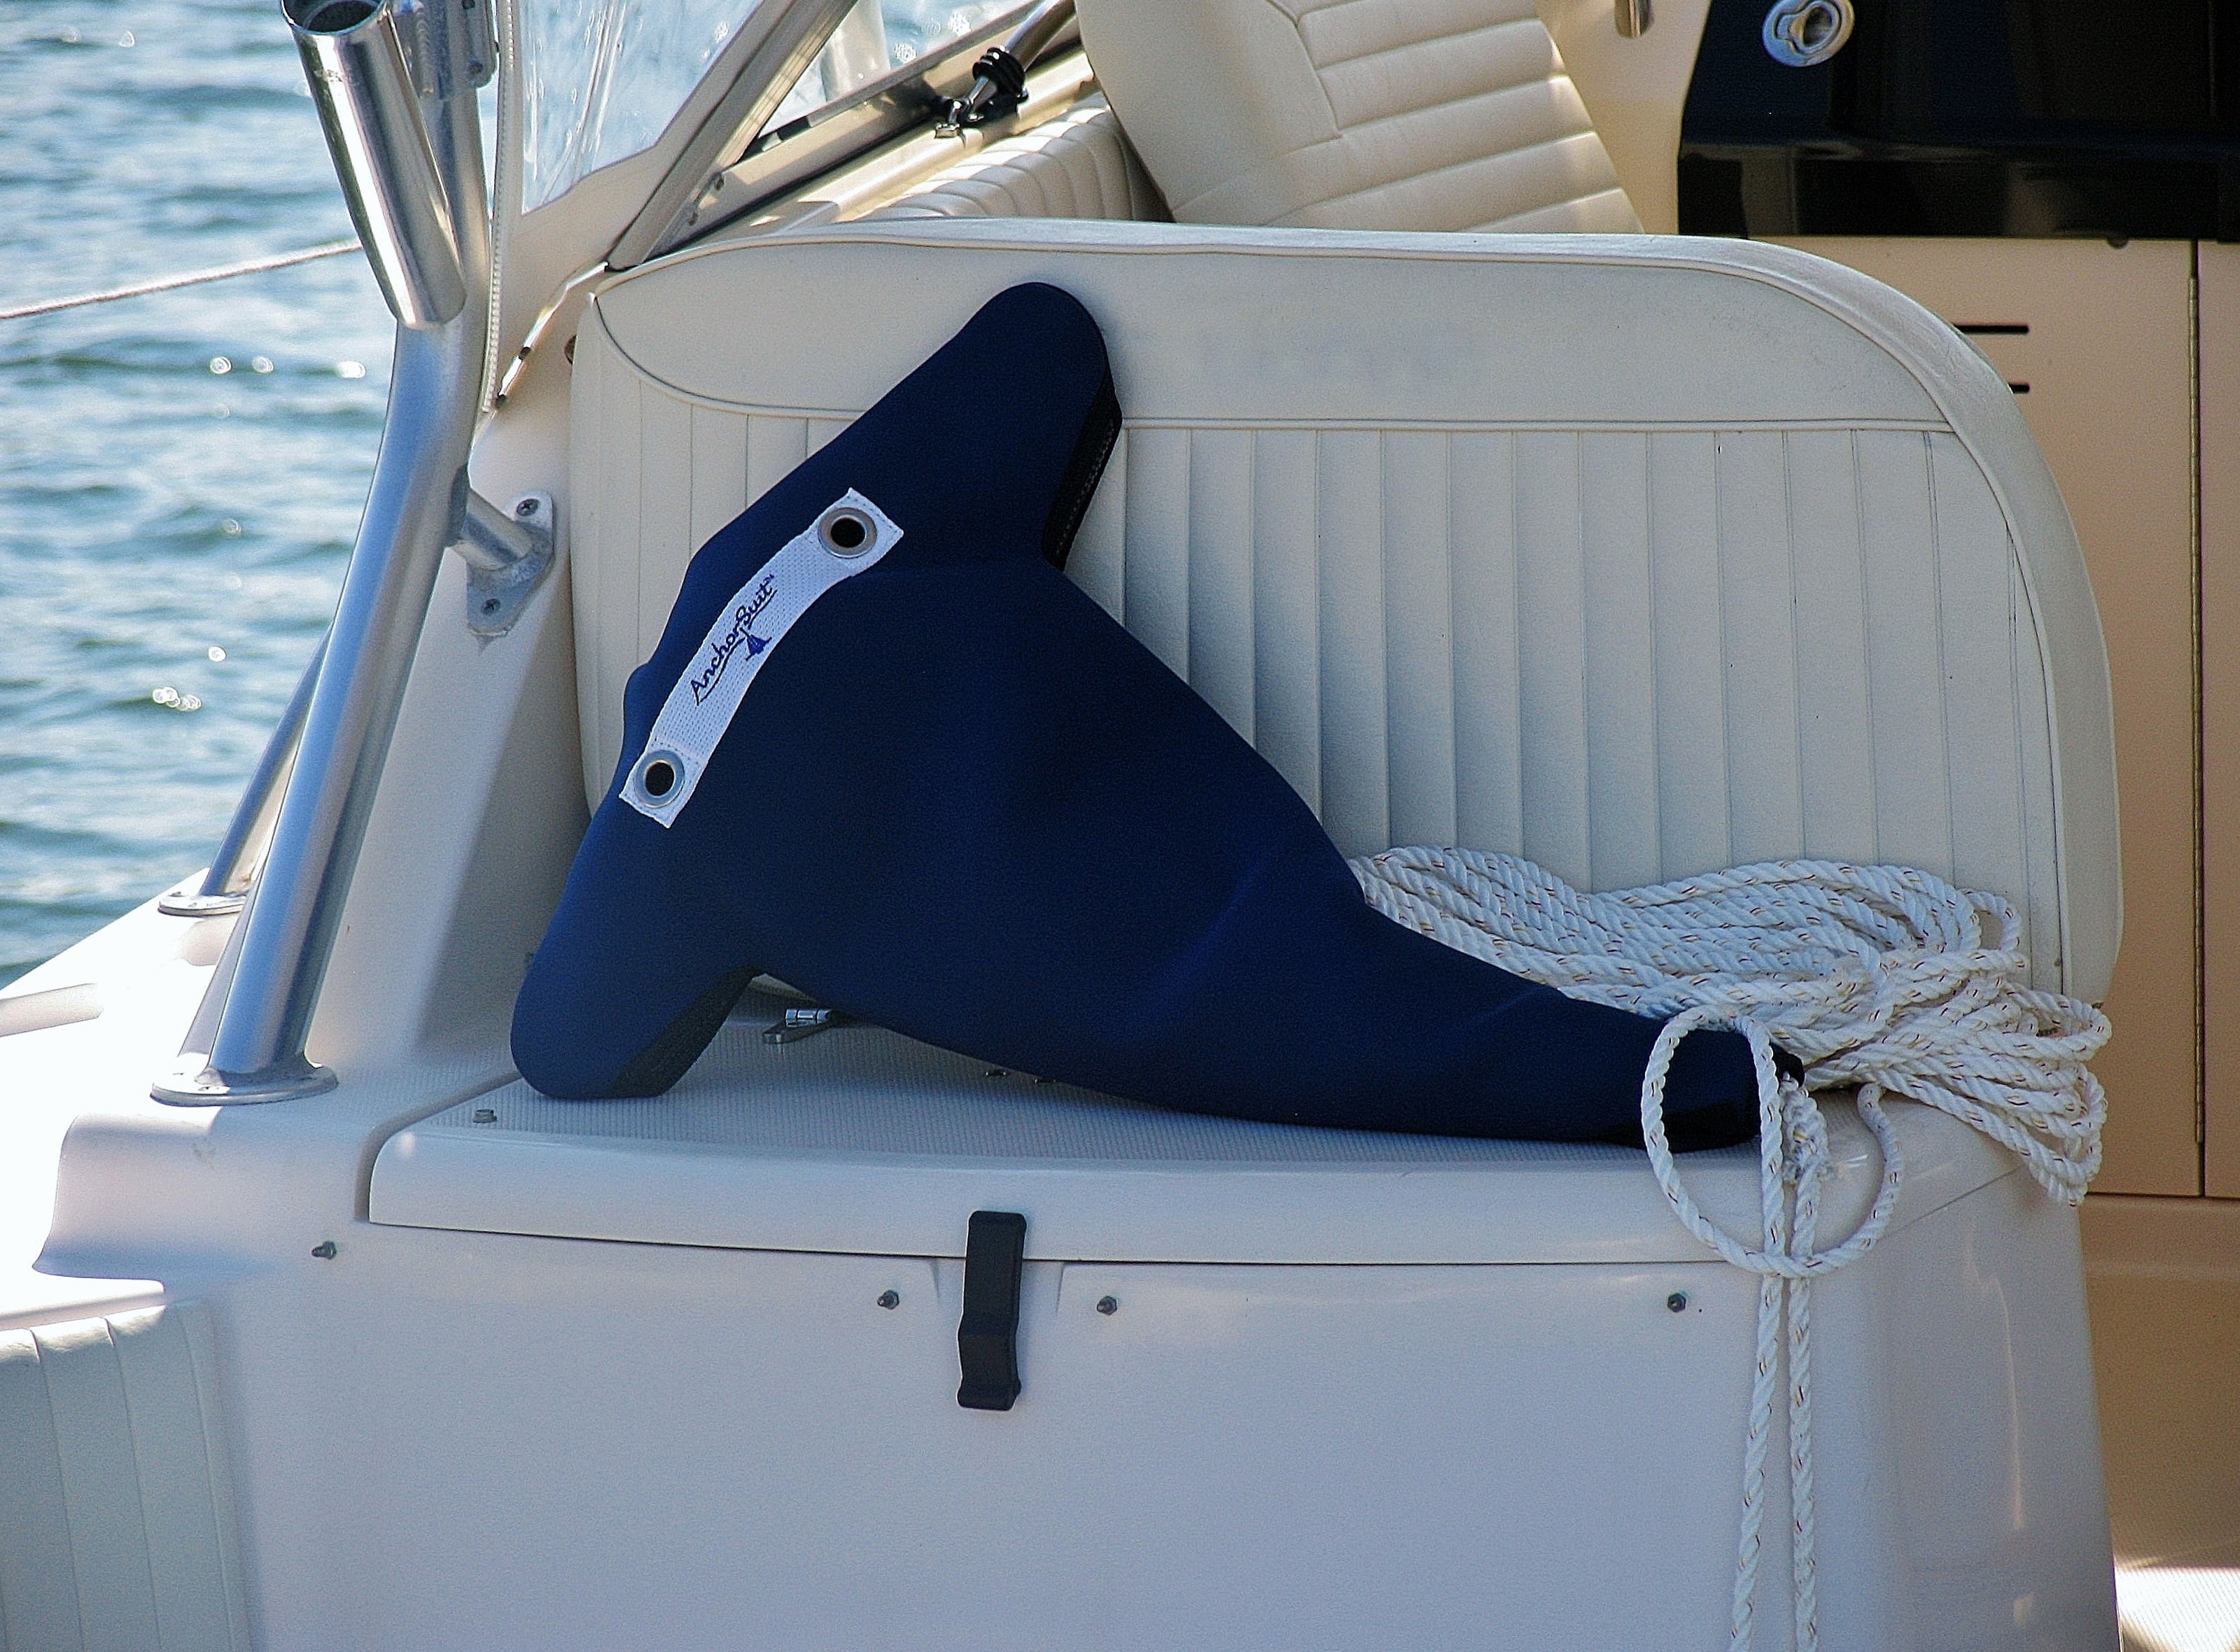 Boat Accessories & Supplies - Innovative & Premium